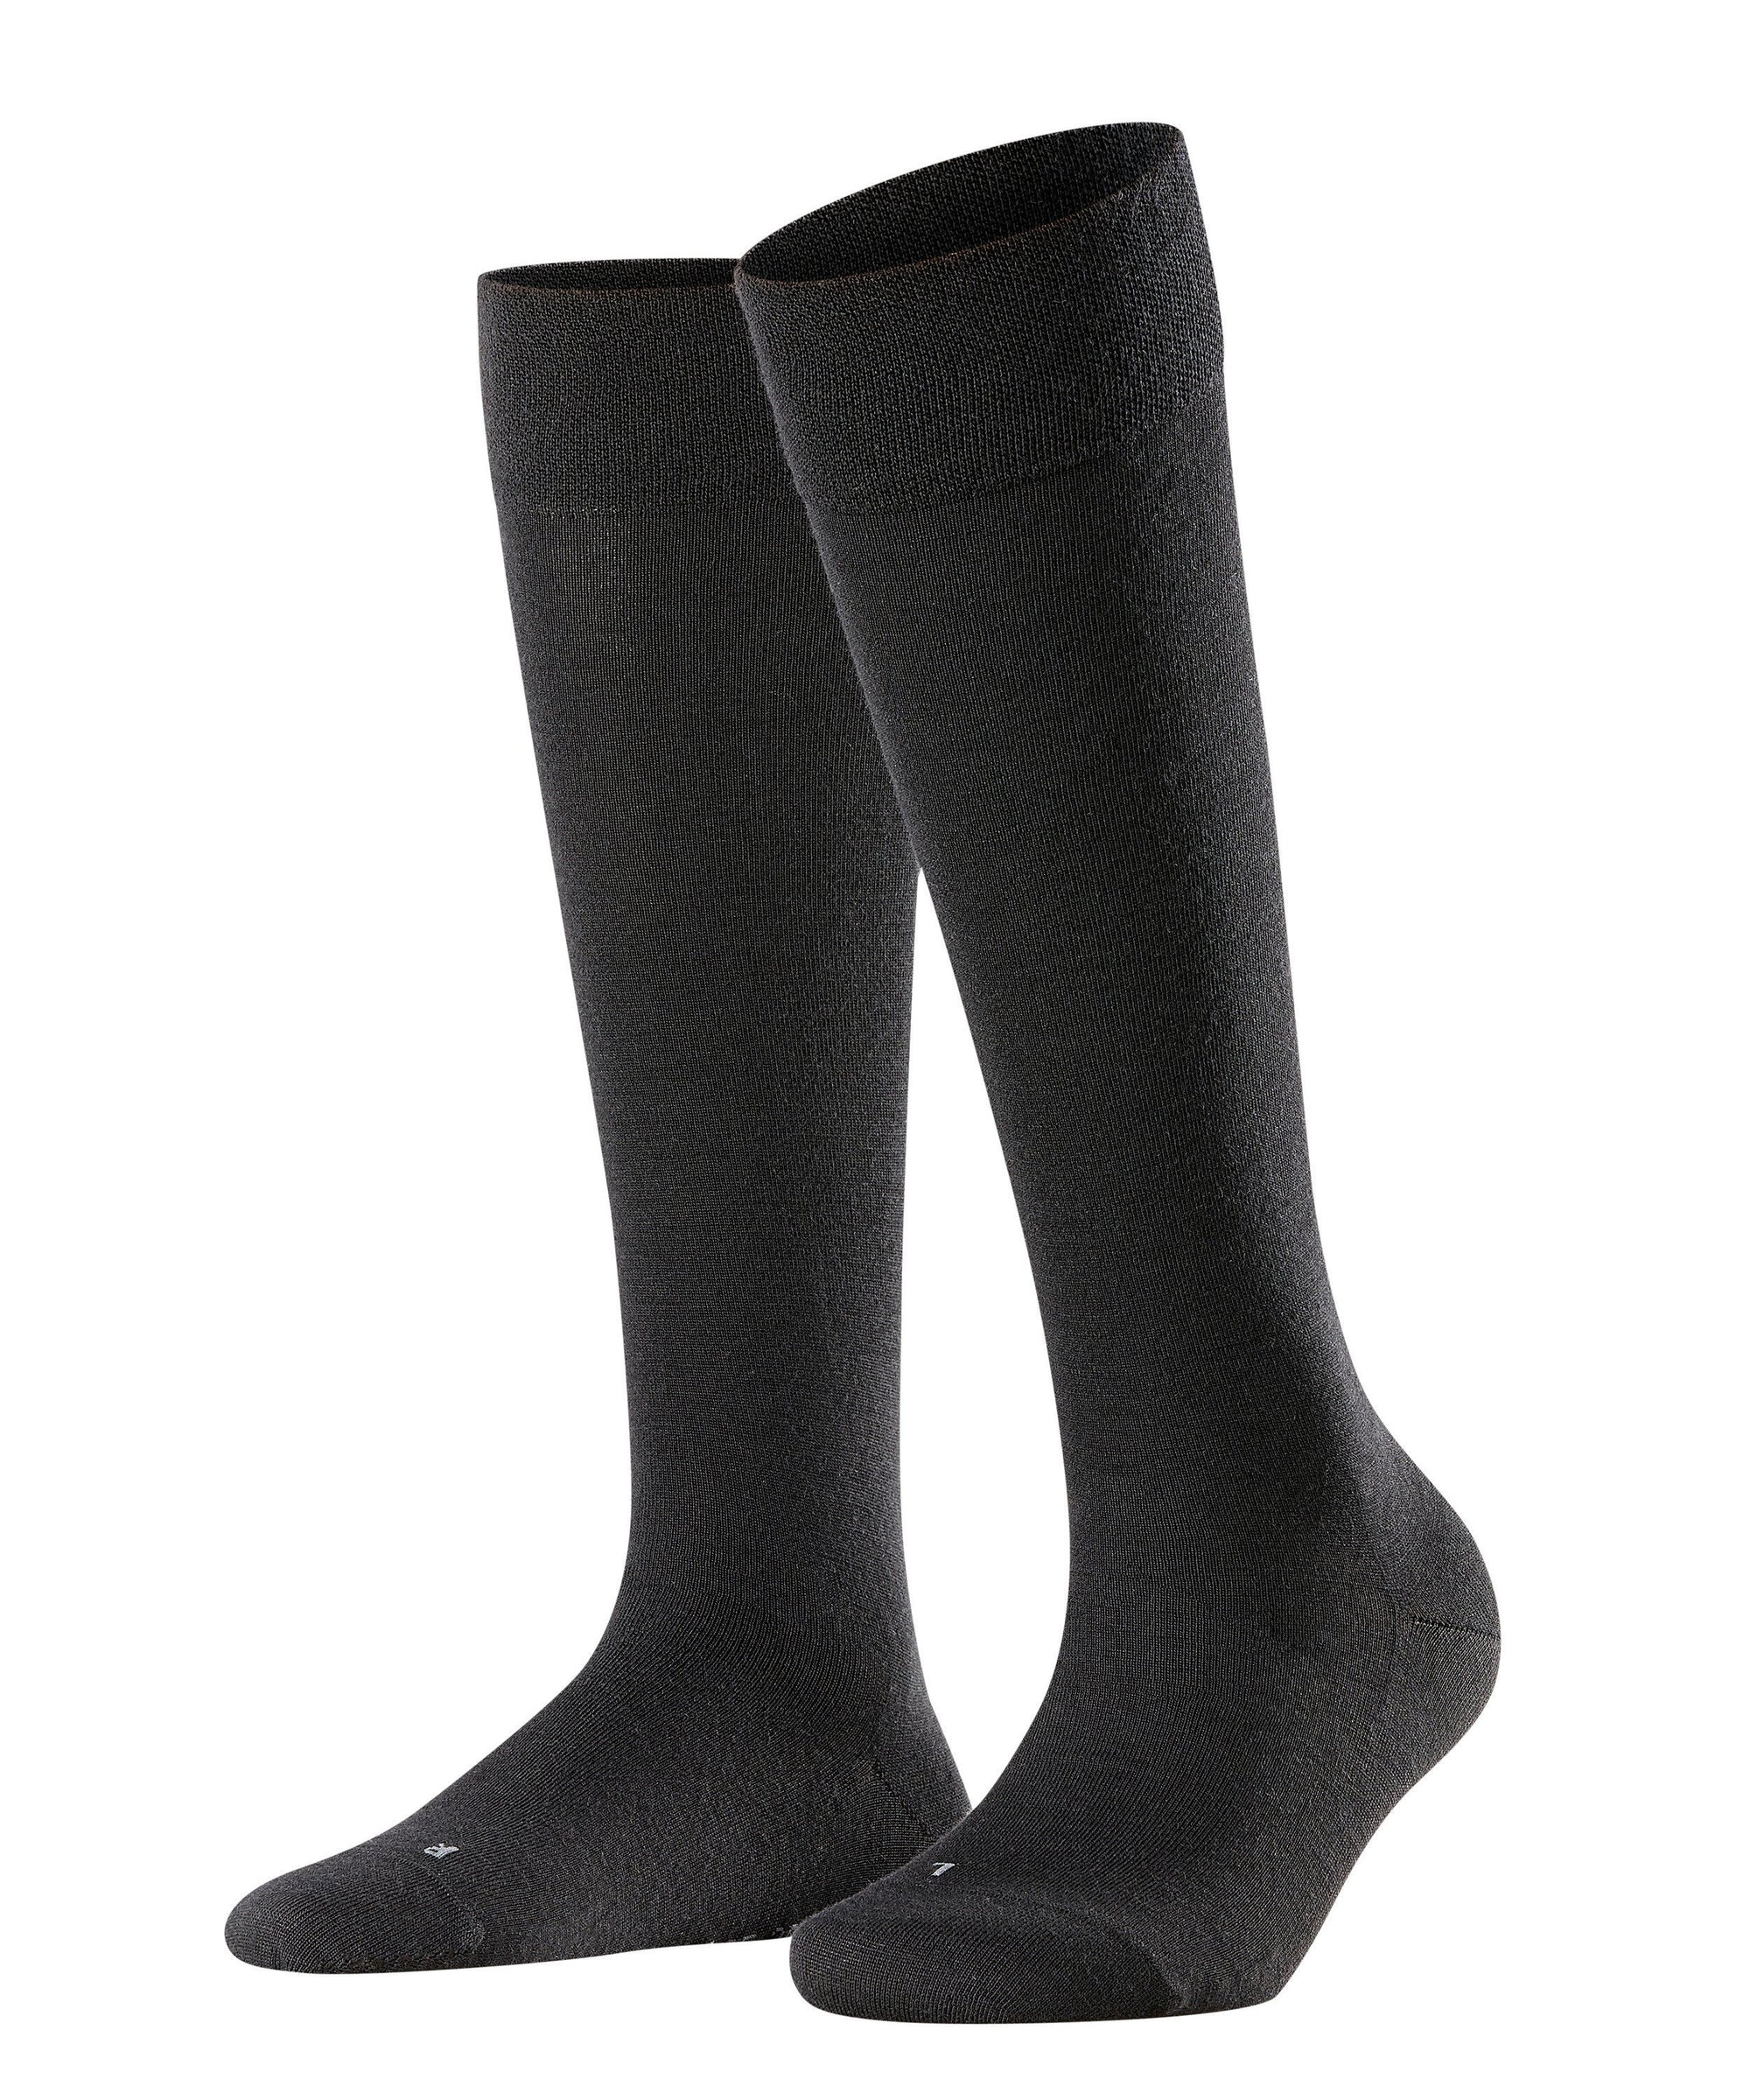 Falke Sensitive Berlin Knee-high Socks Black